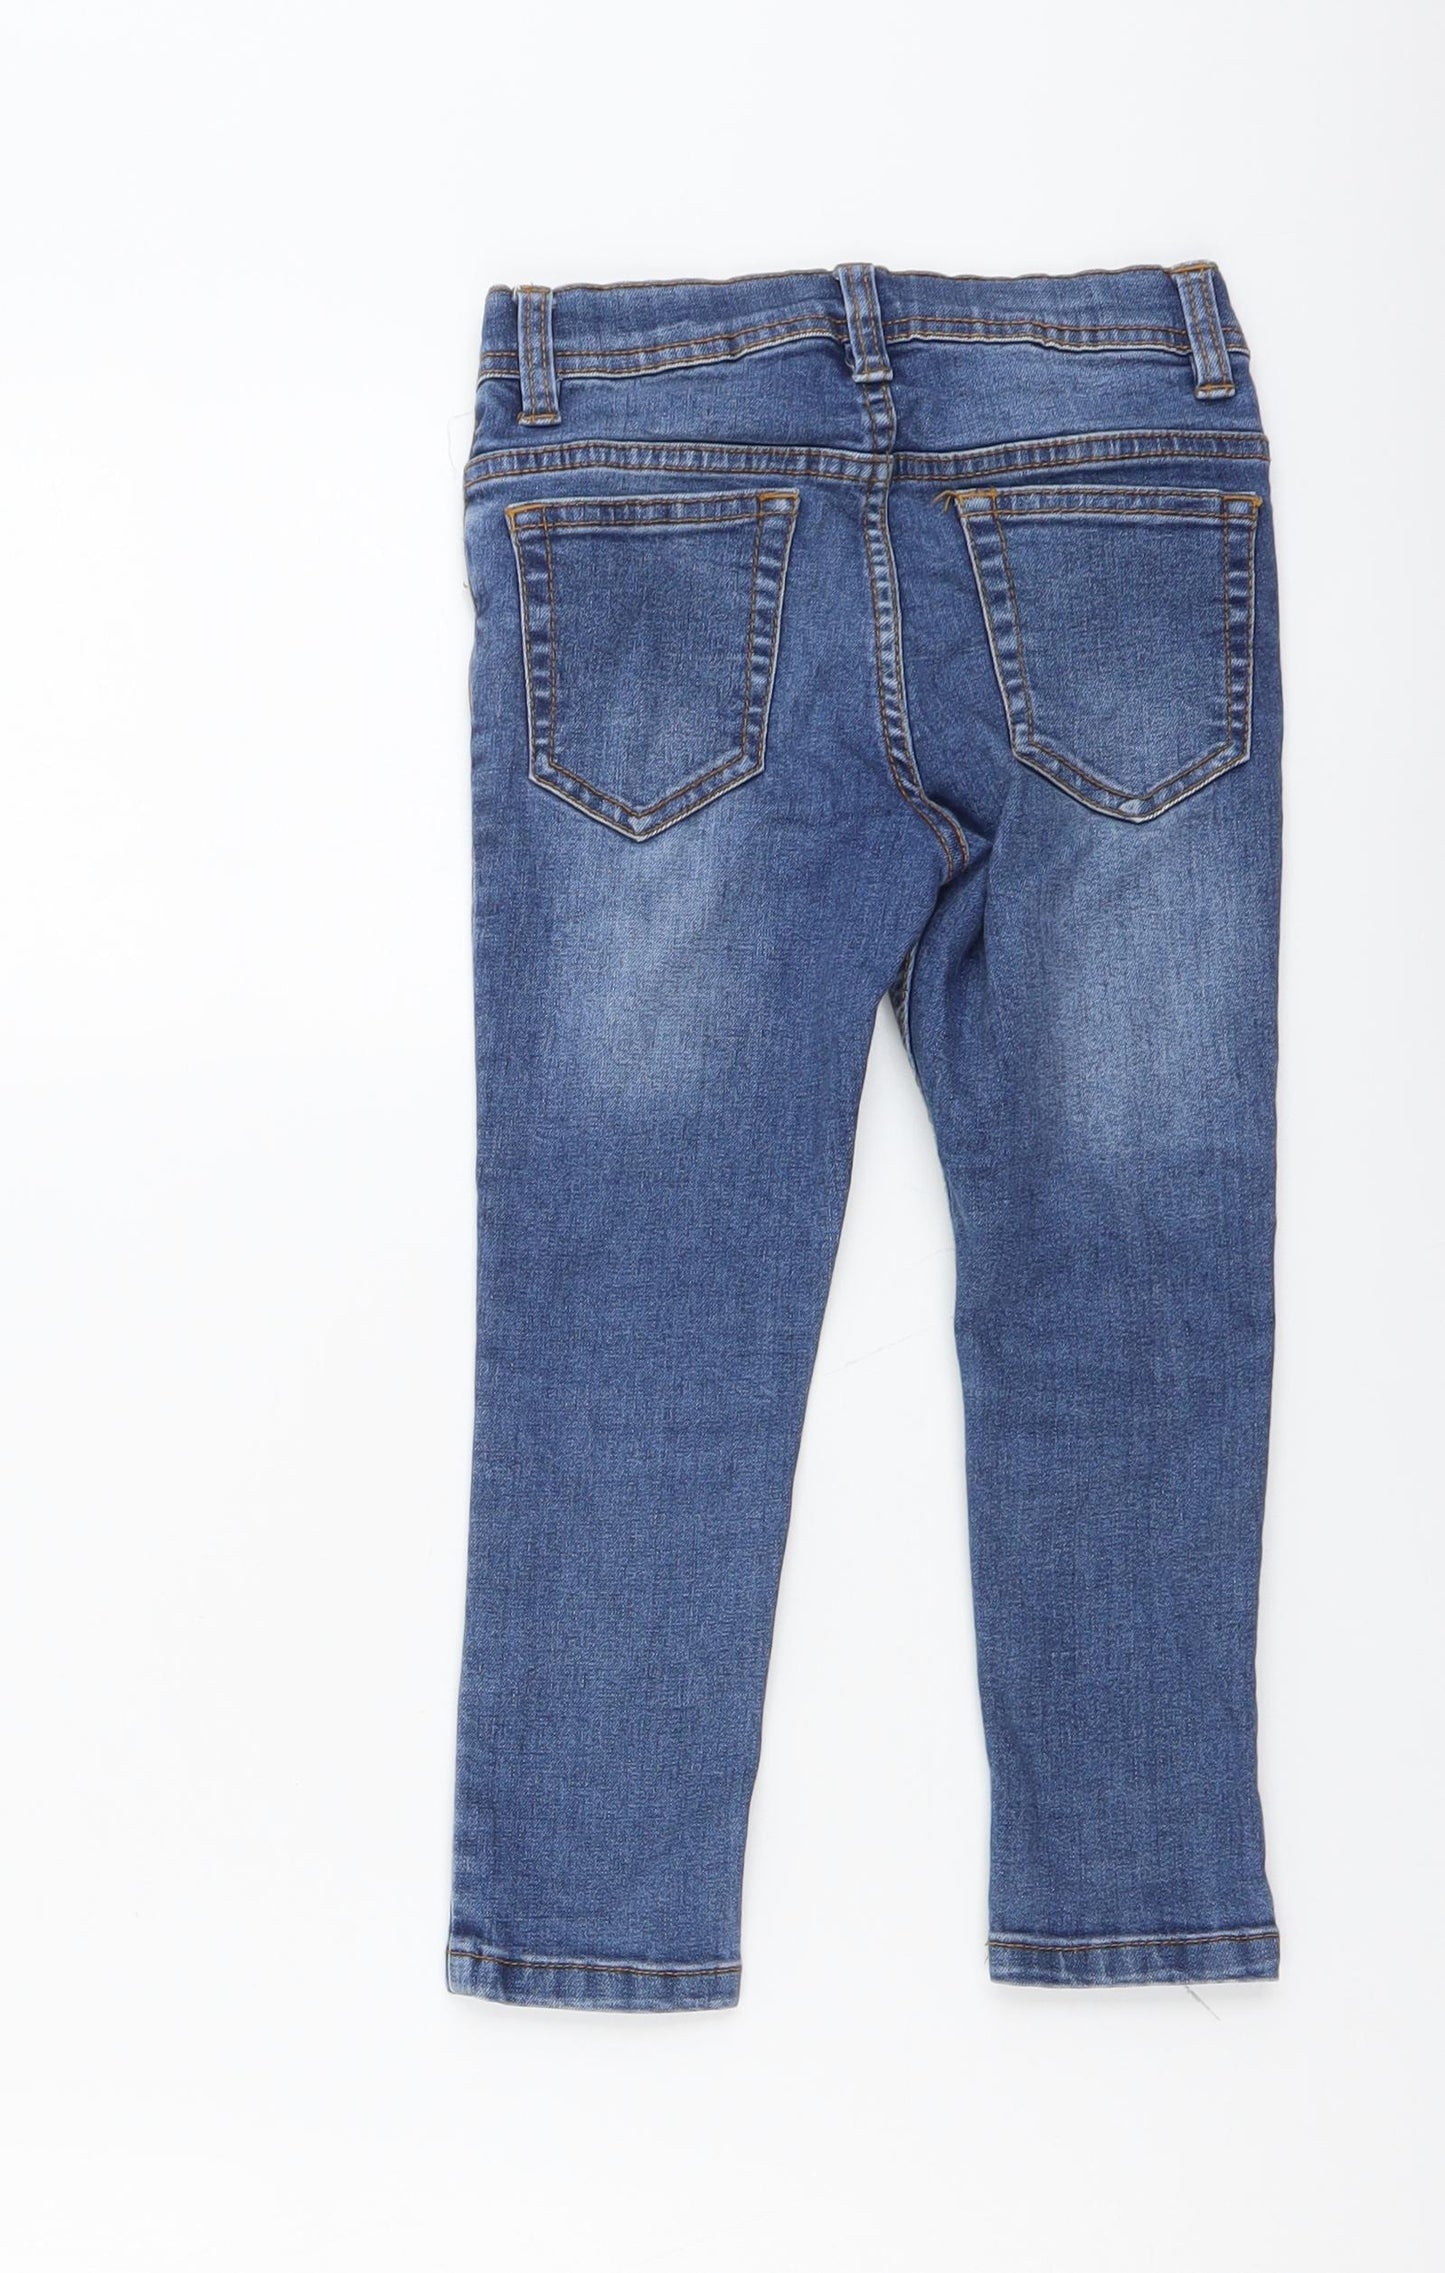 Denim & Co. Girls Blue Cotton Skinny Jeans Size 4-5 Years Regular Button